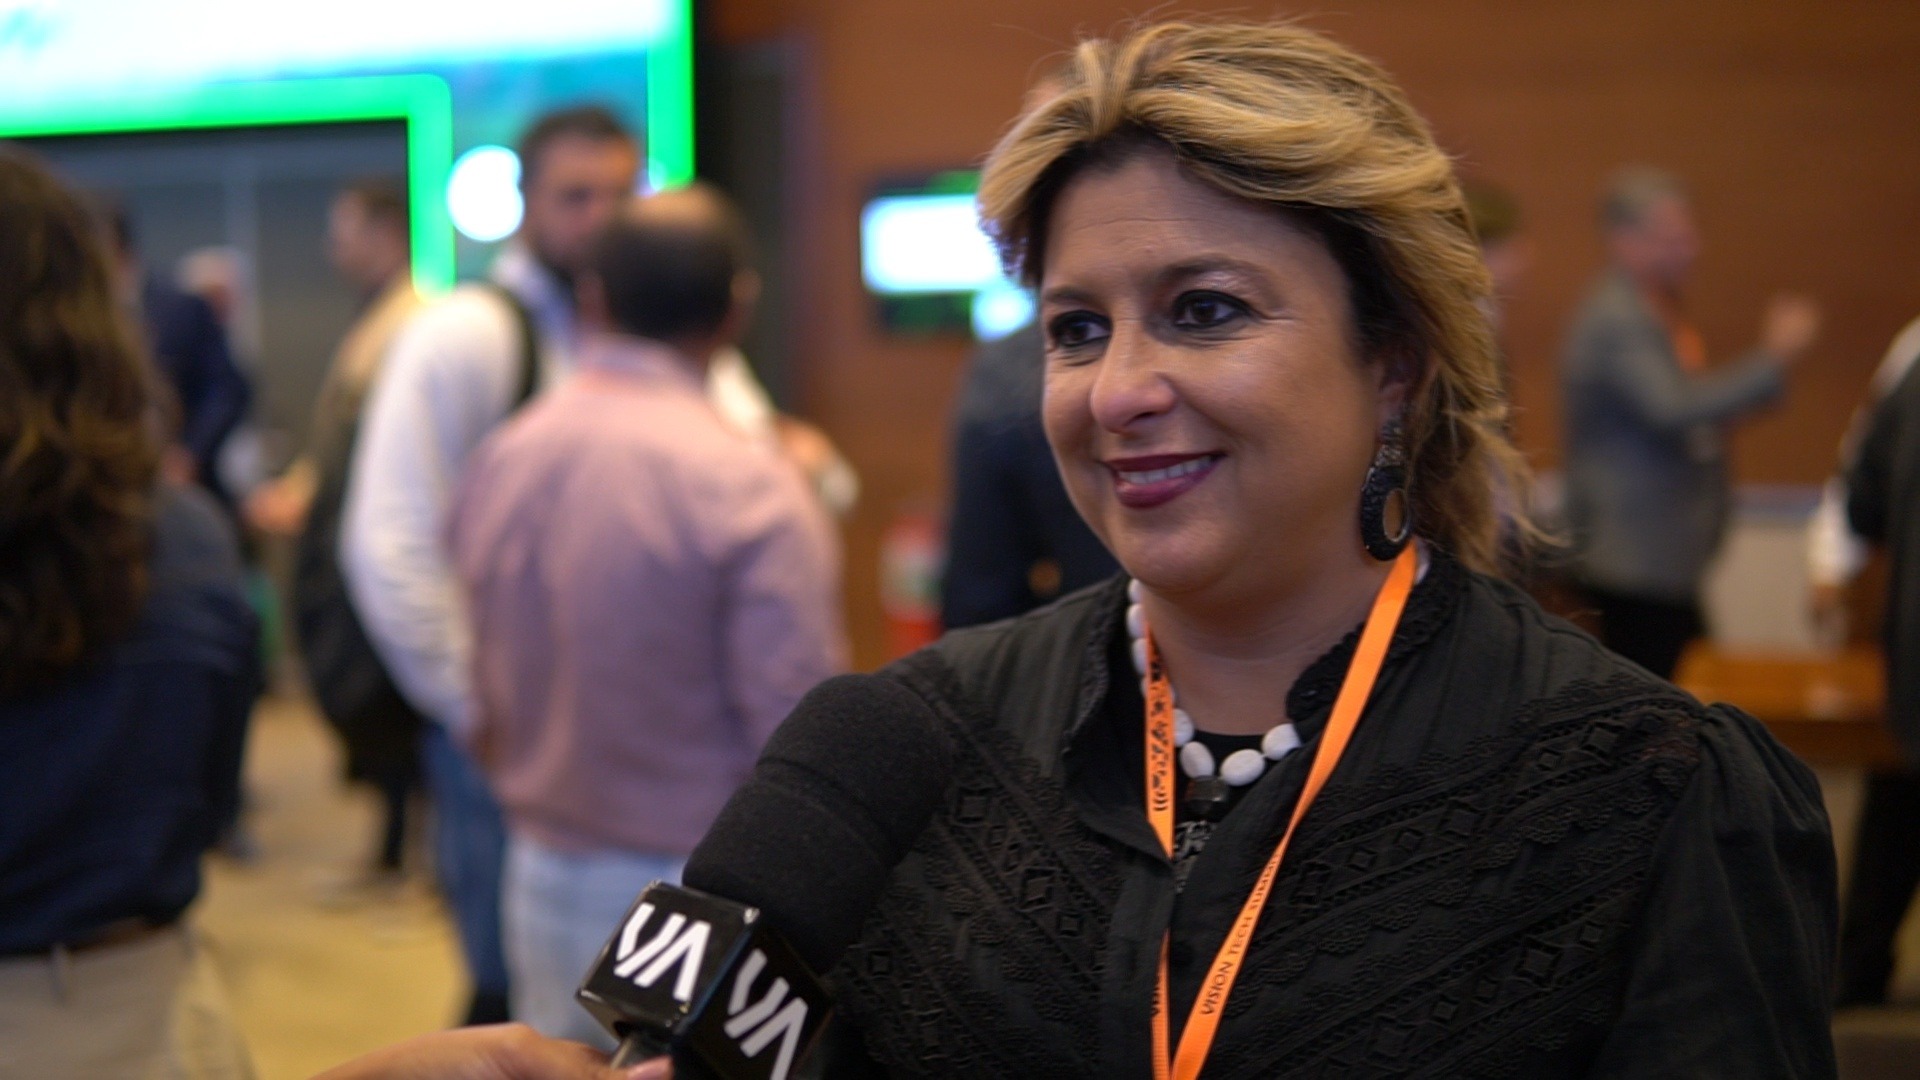 VA Entrevista: Juliana Farah, vice-presidente das Semeadoras do Agro, destaca a força da mulher do campo